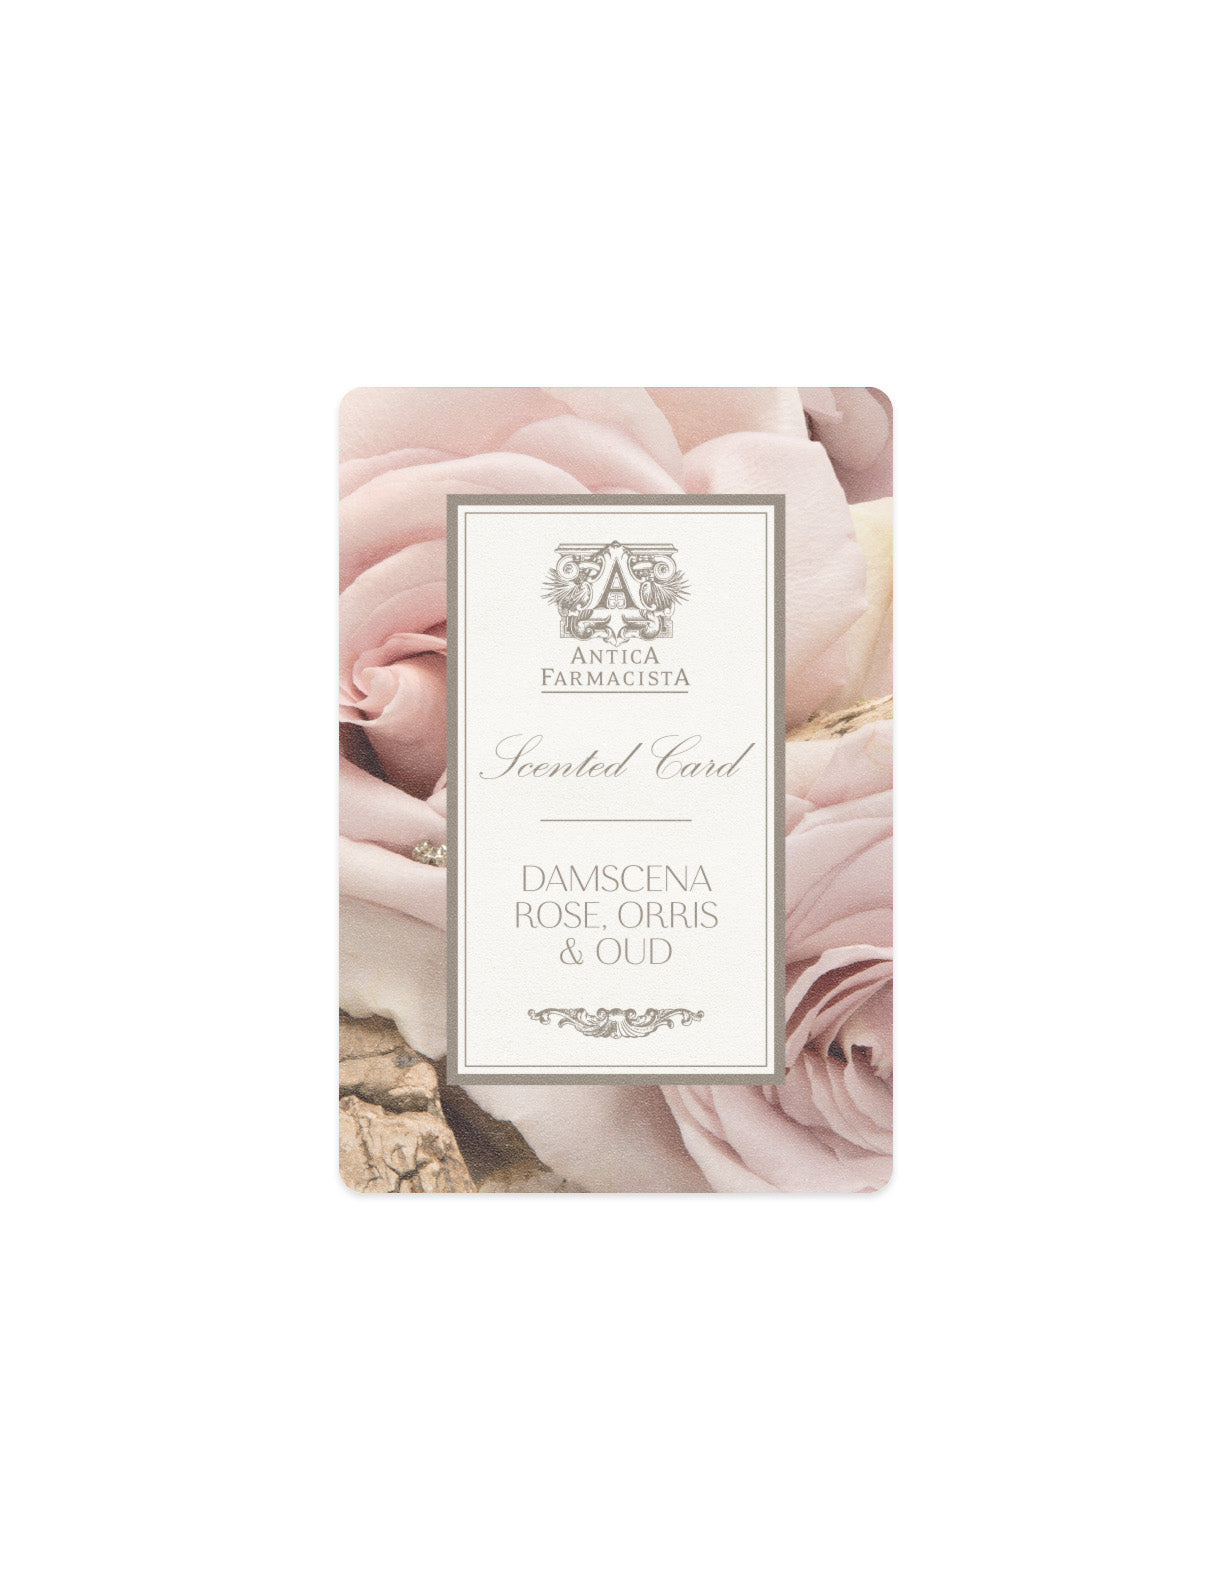 GWP - Scented Card - Damascena Rose, Orris & Oud